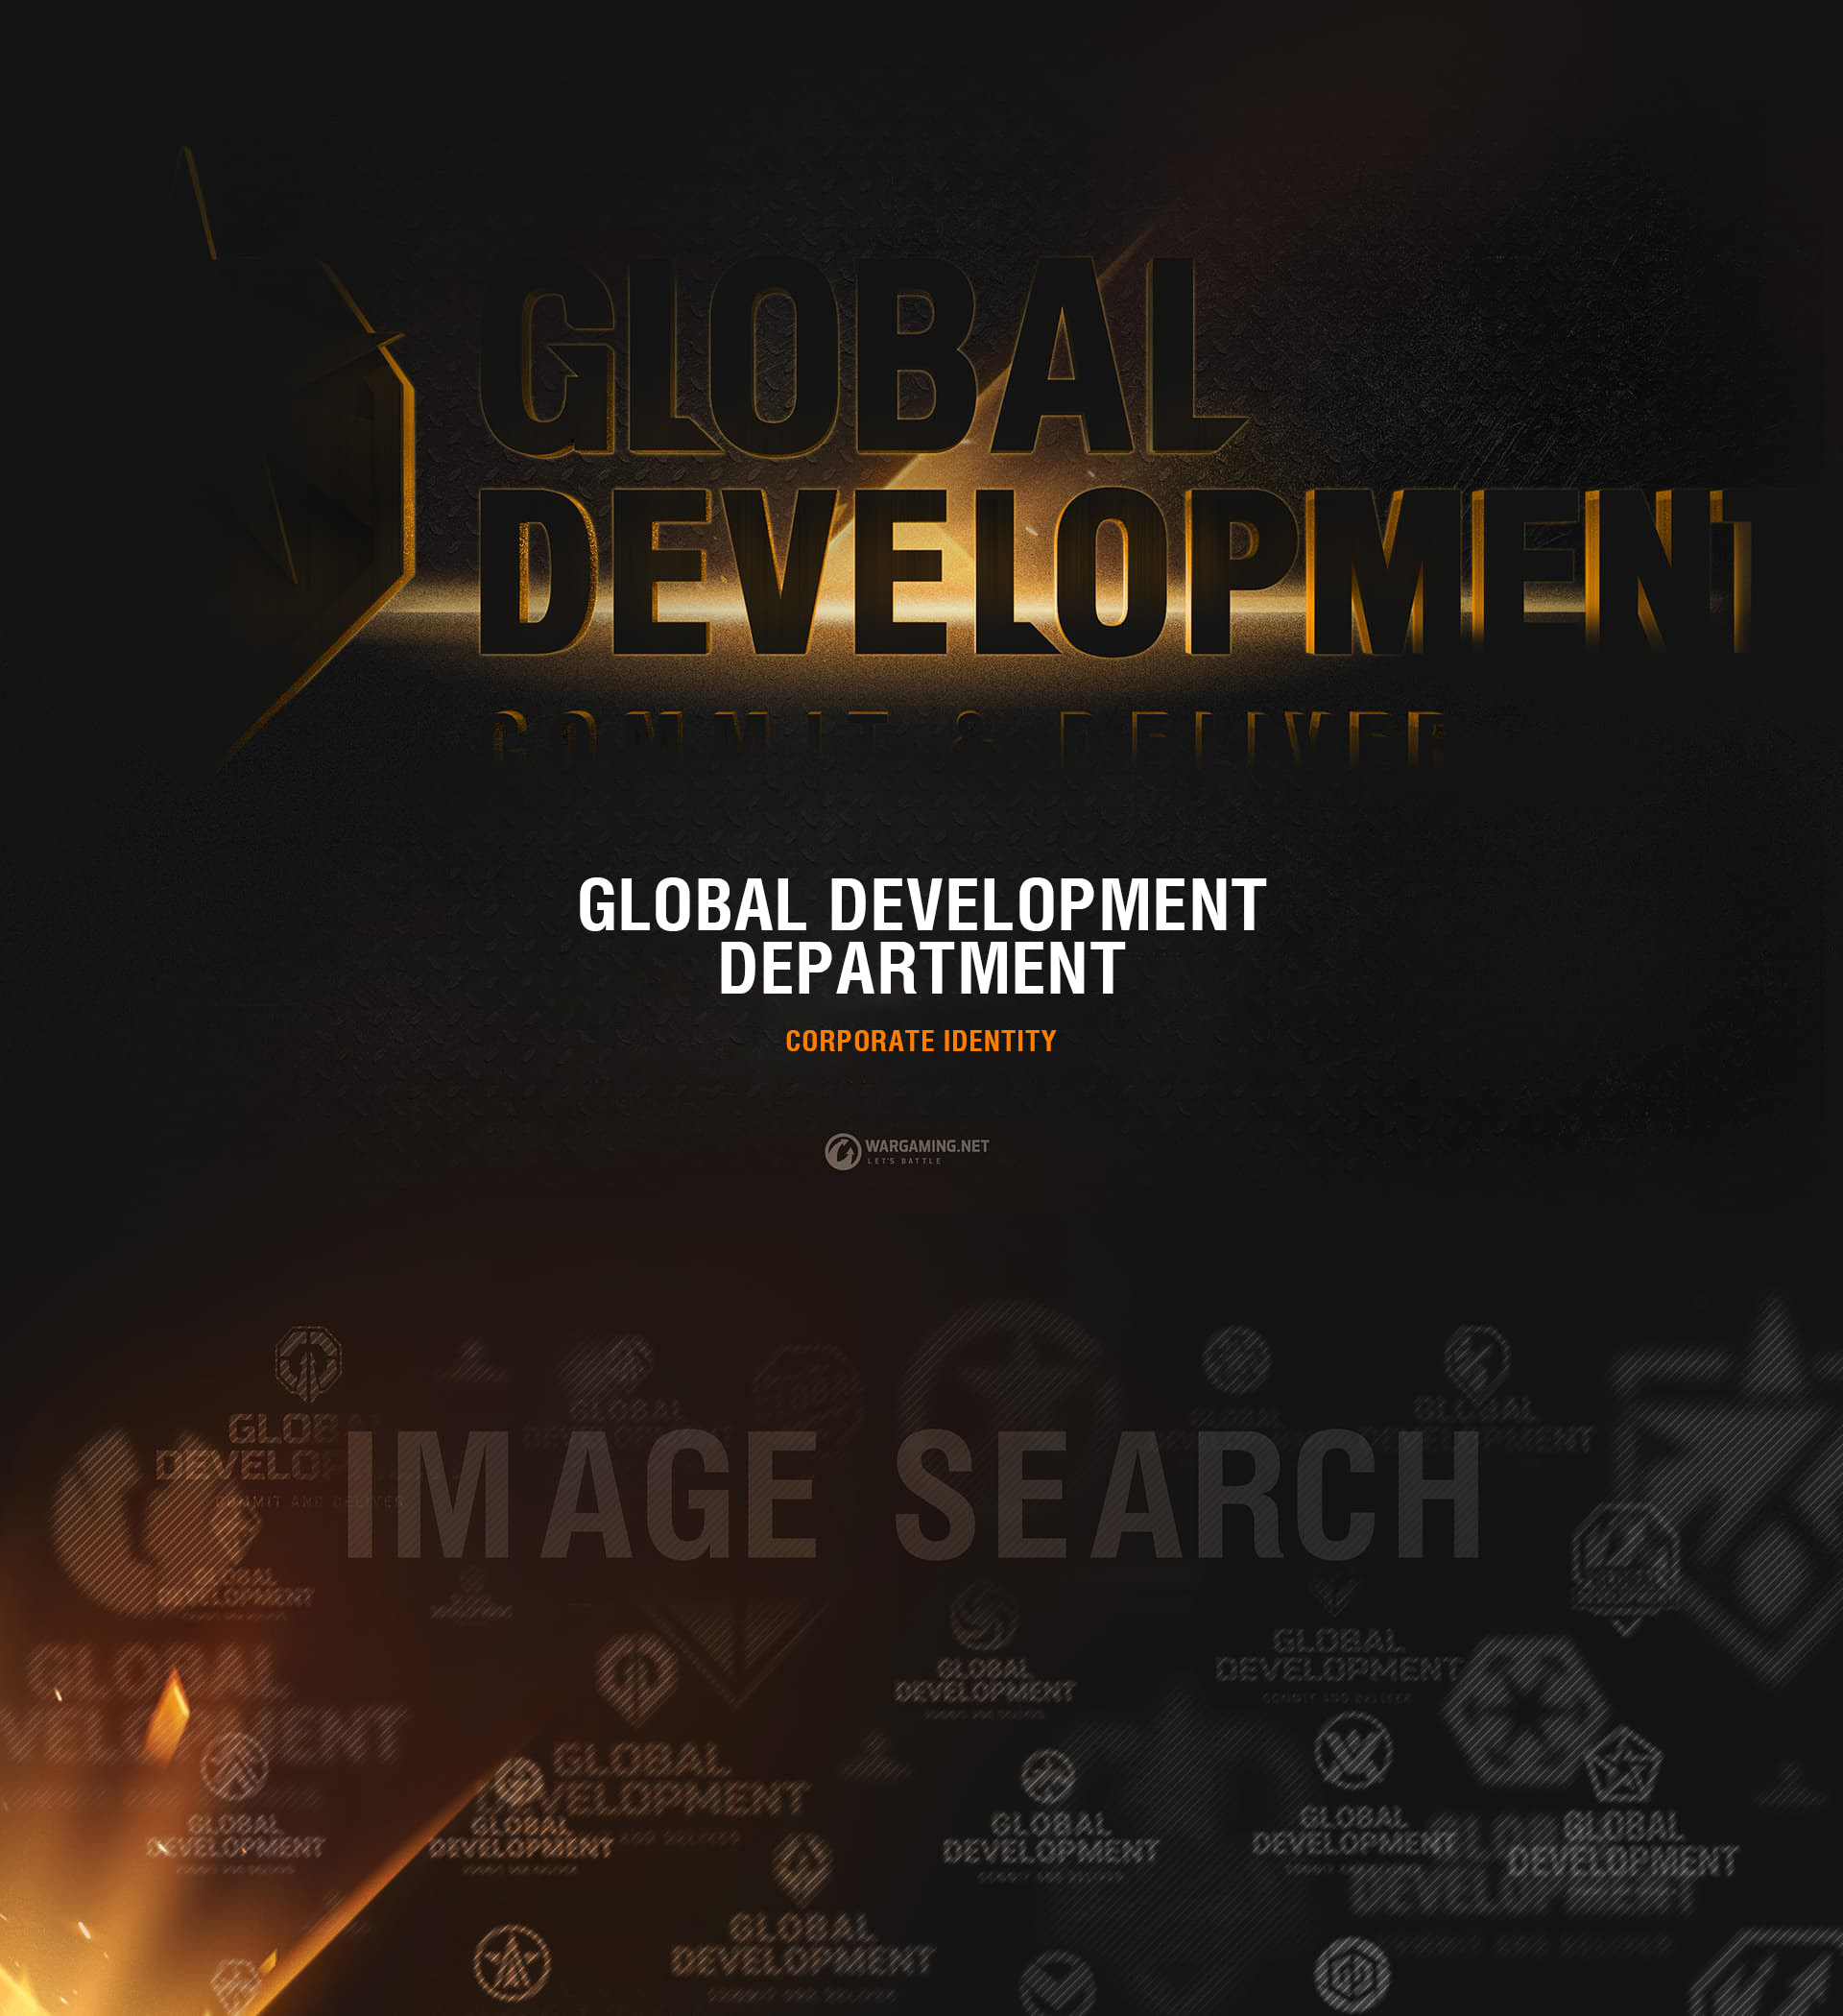 Global Development image